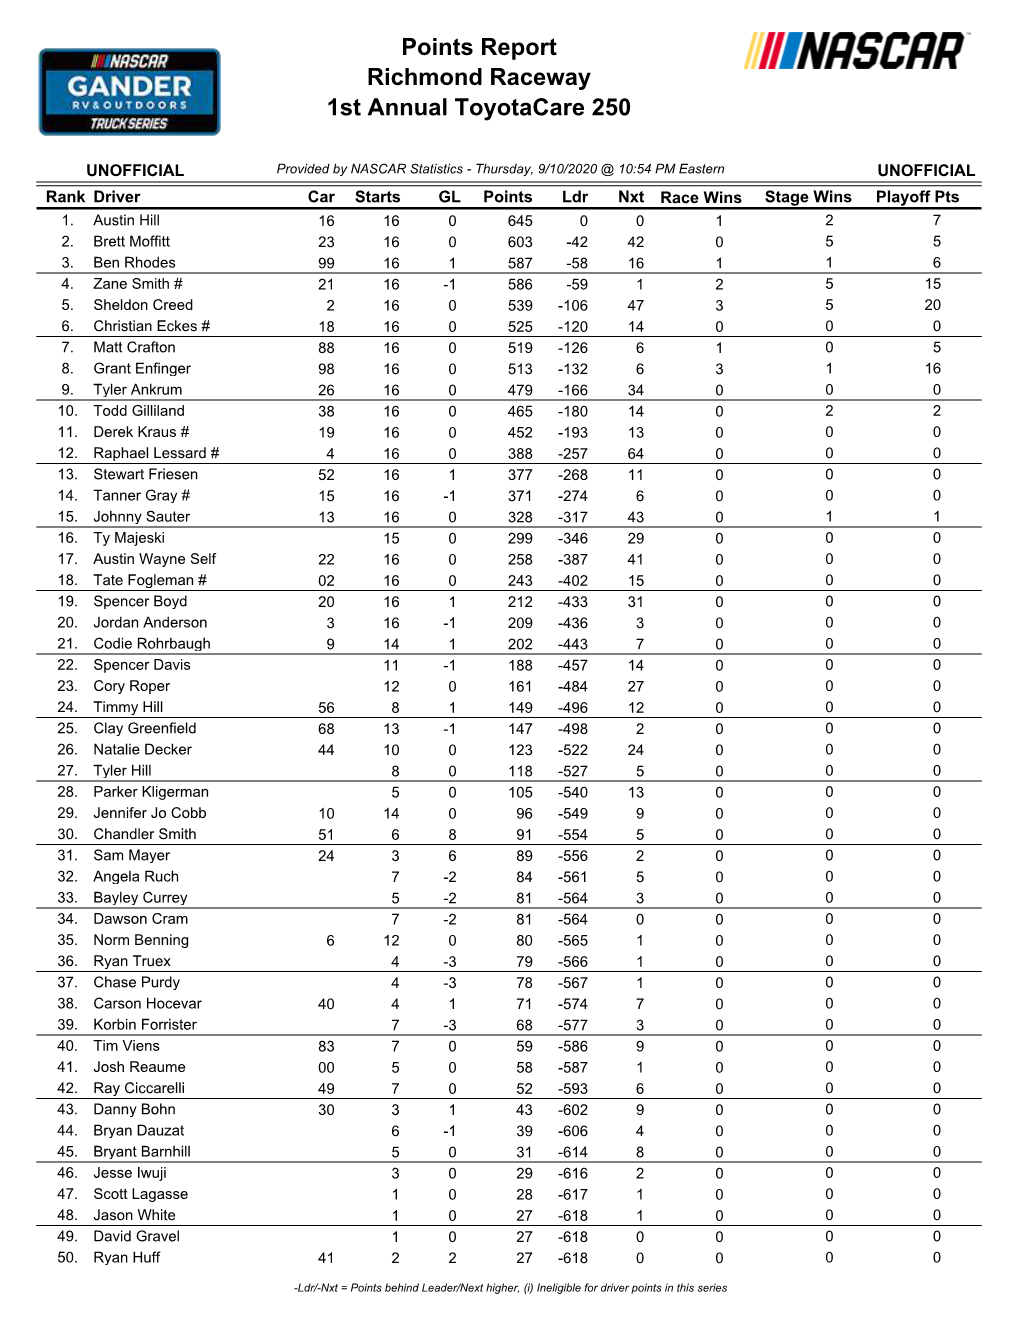 Points Report Richmond Raceway 1St Annual Toyotacare 250